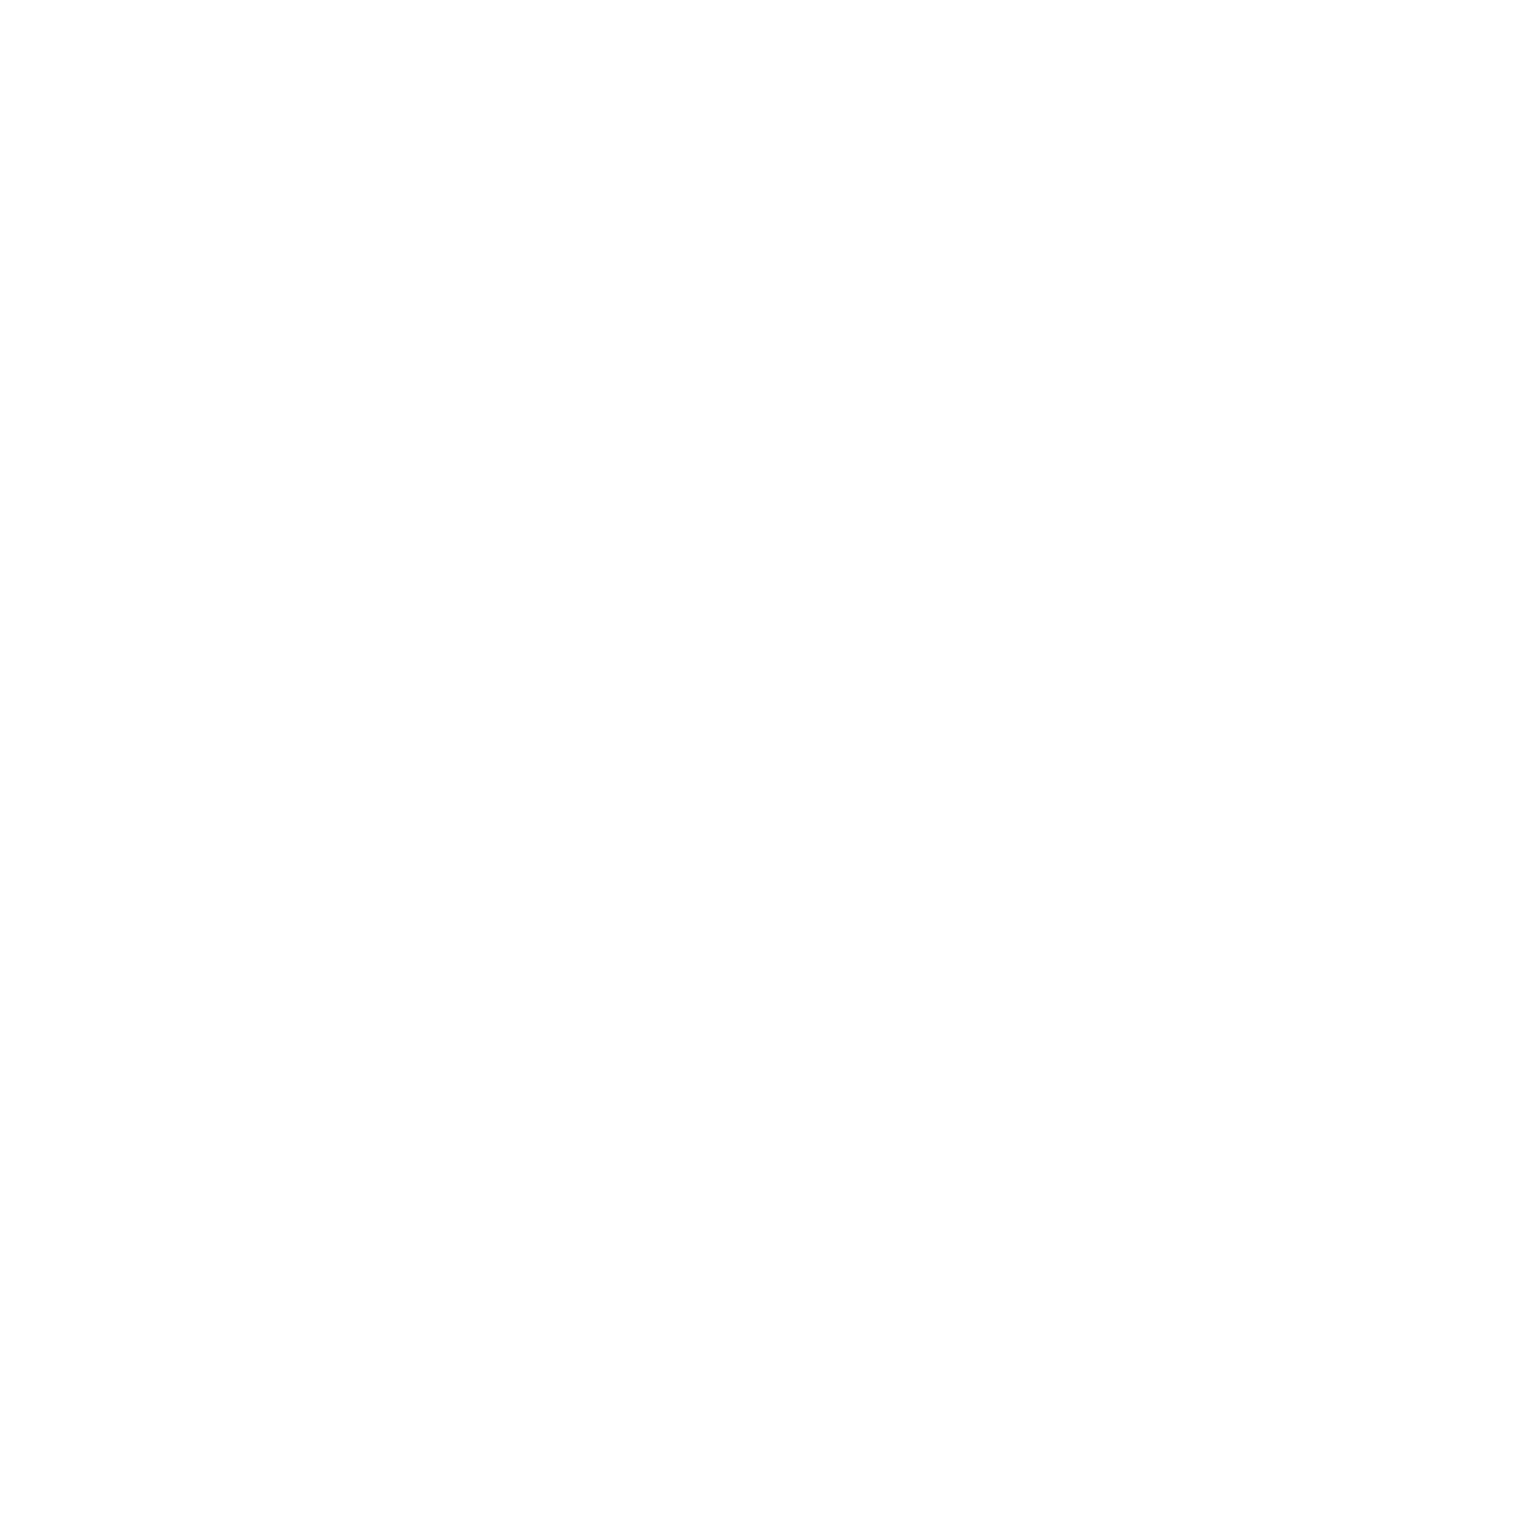 AD.nl